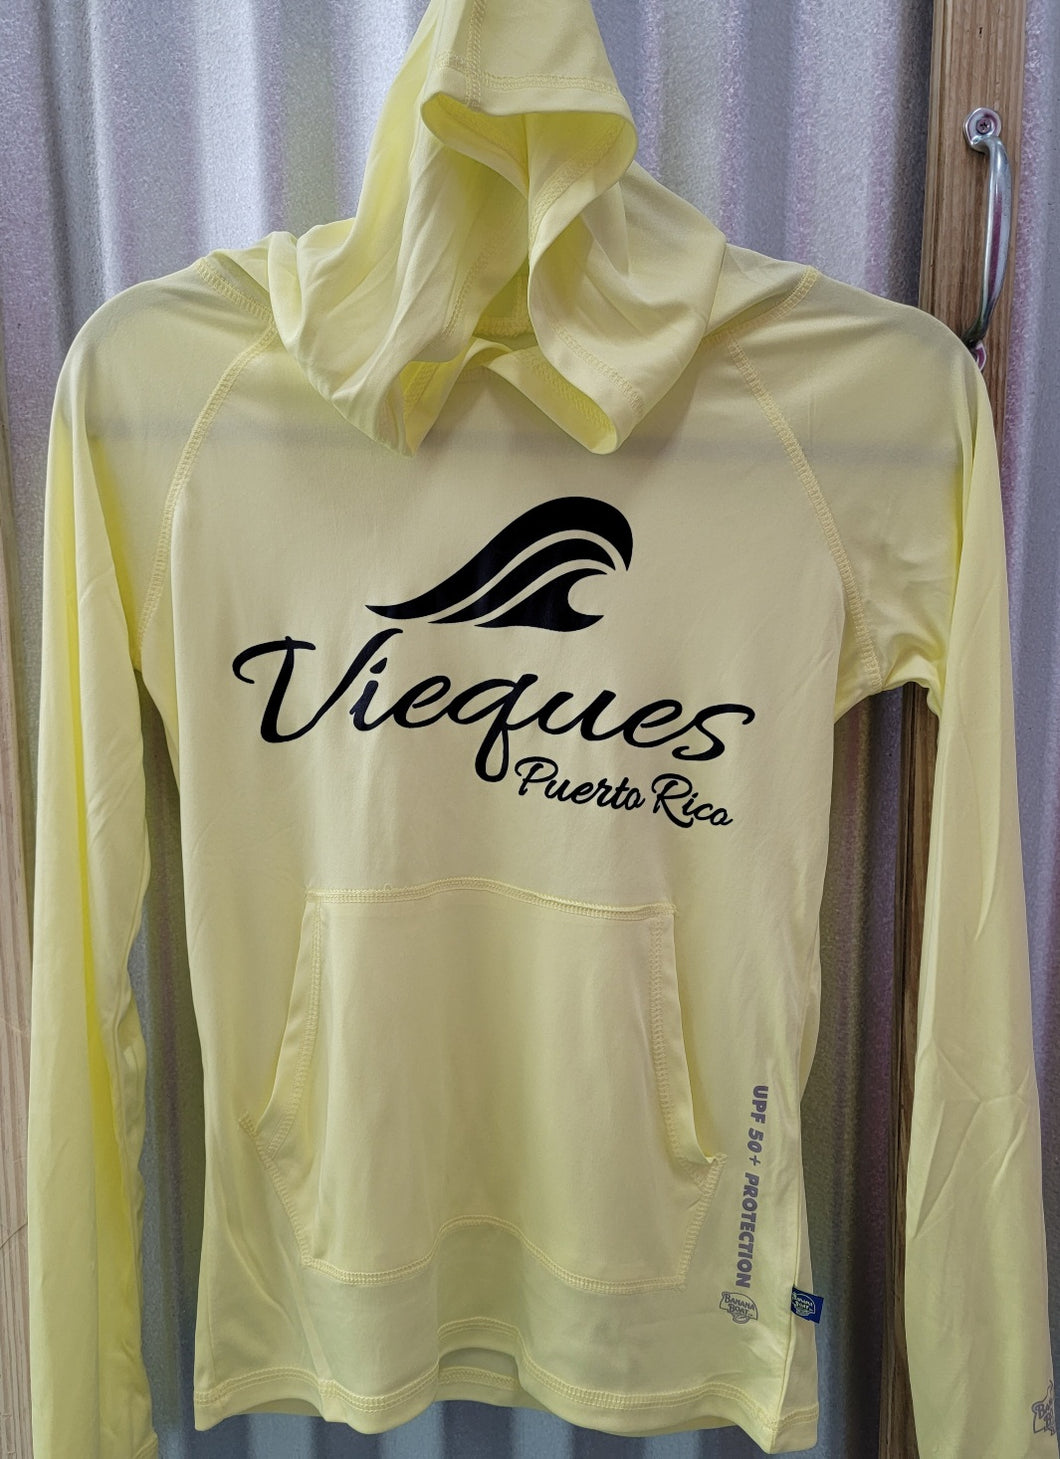 Vieques Womens's Hooded Rashguard, Soft Yellow